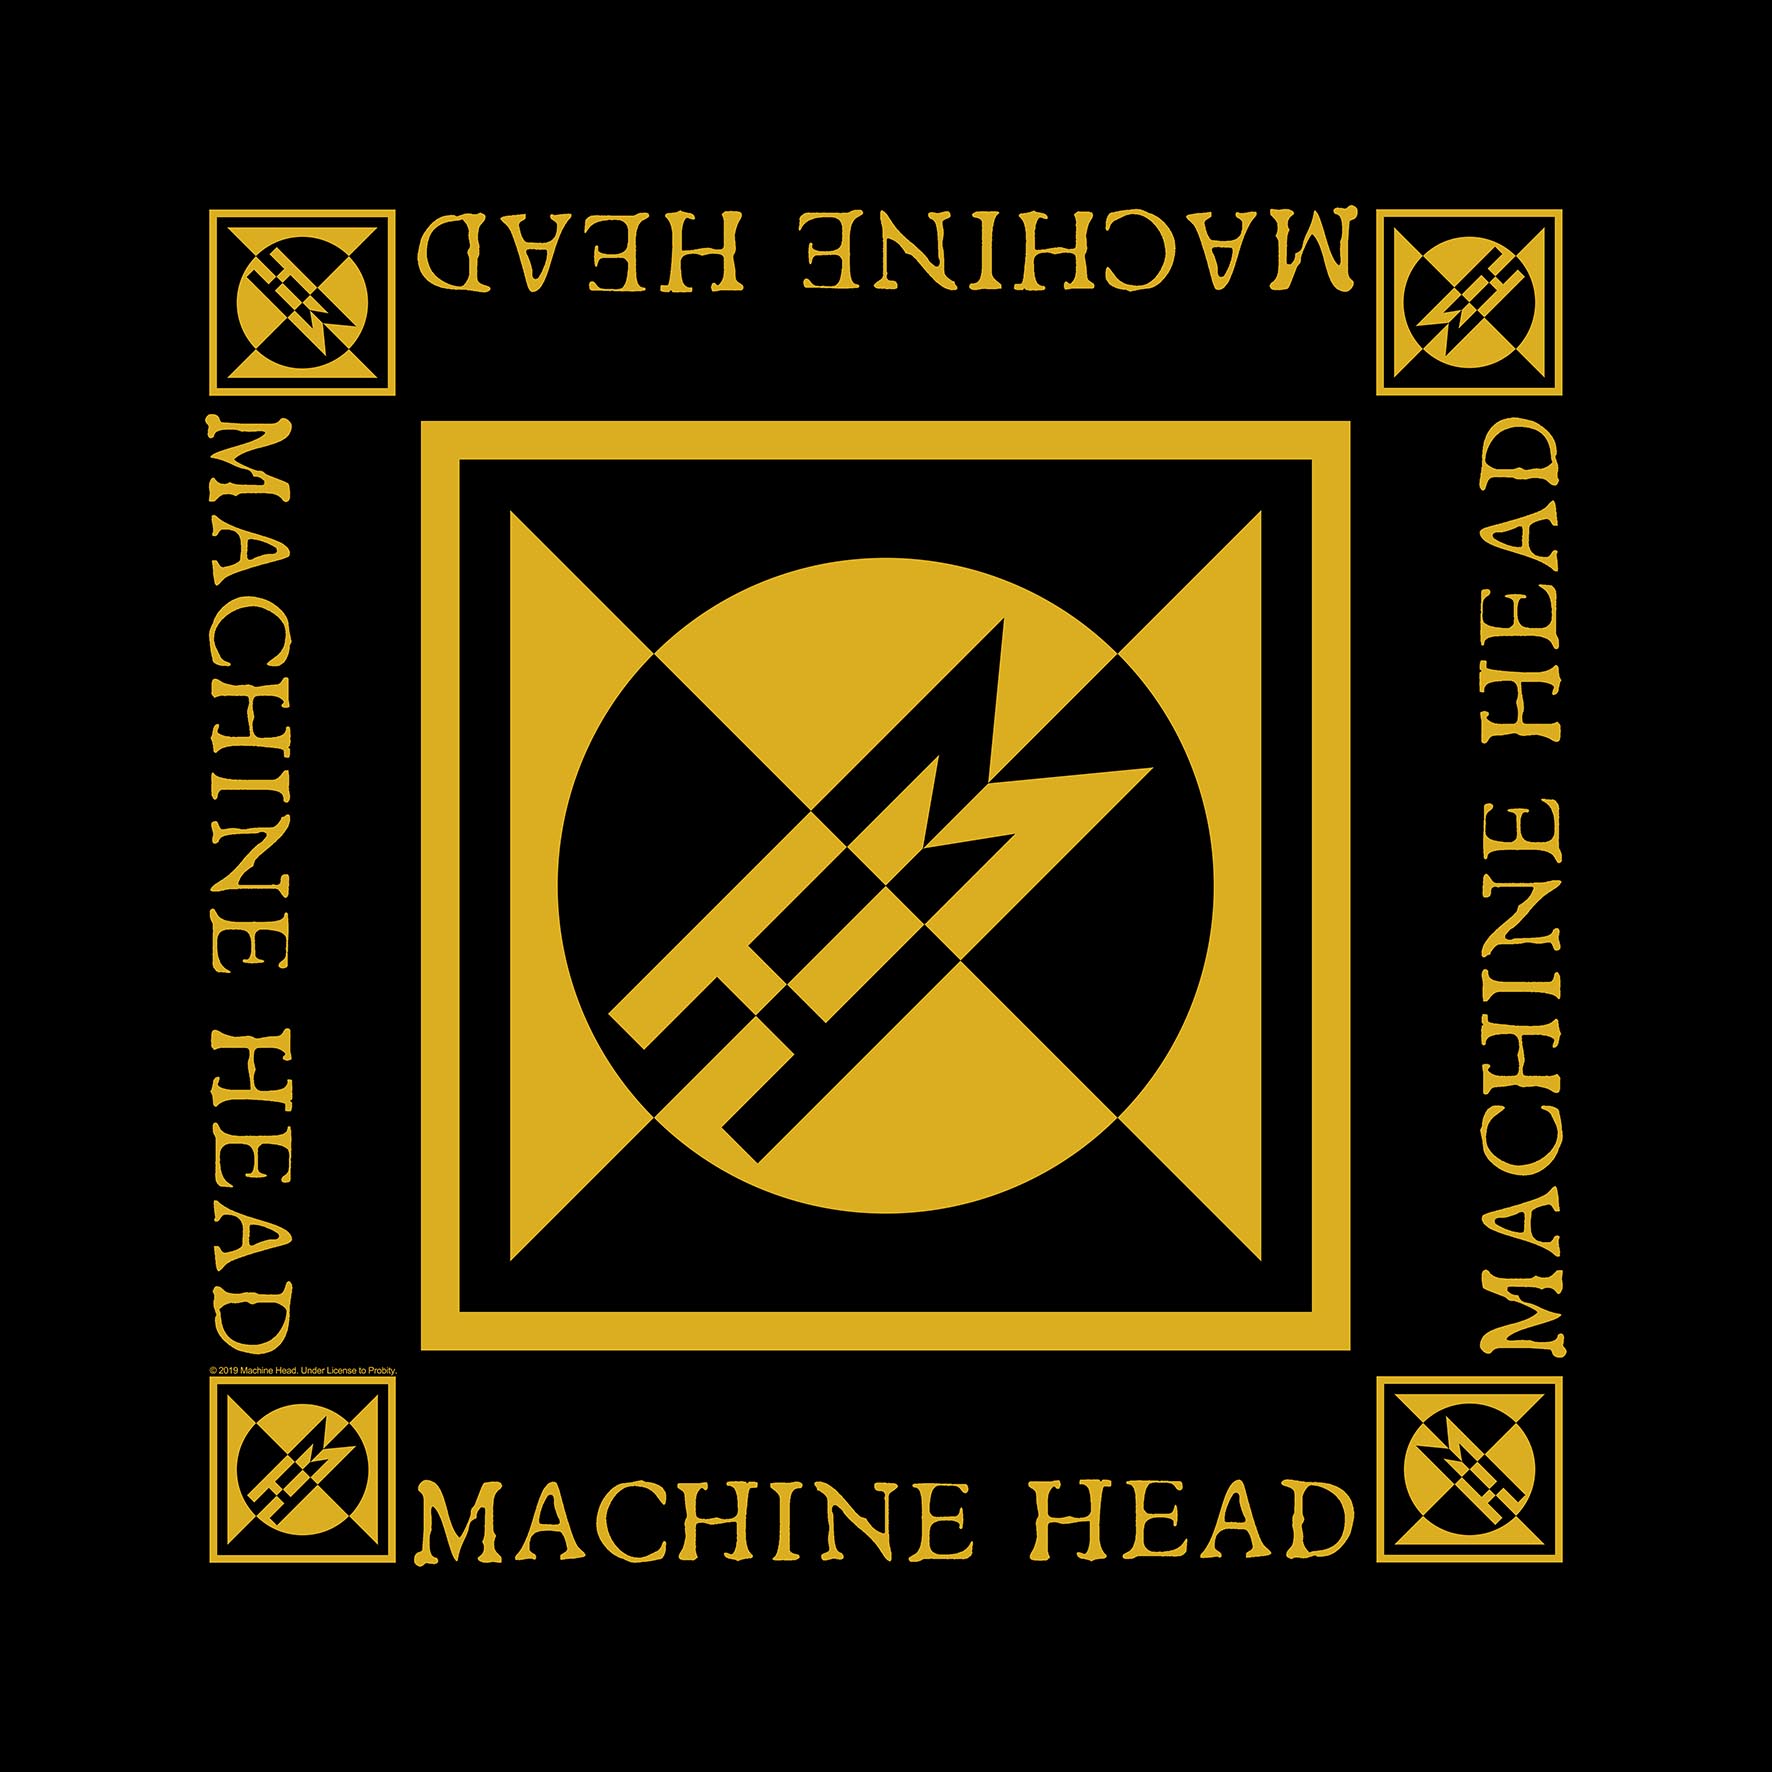 Bandana Machine Head - Diamond Logo B087